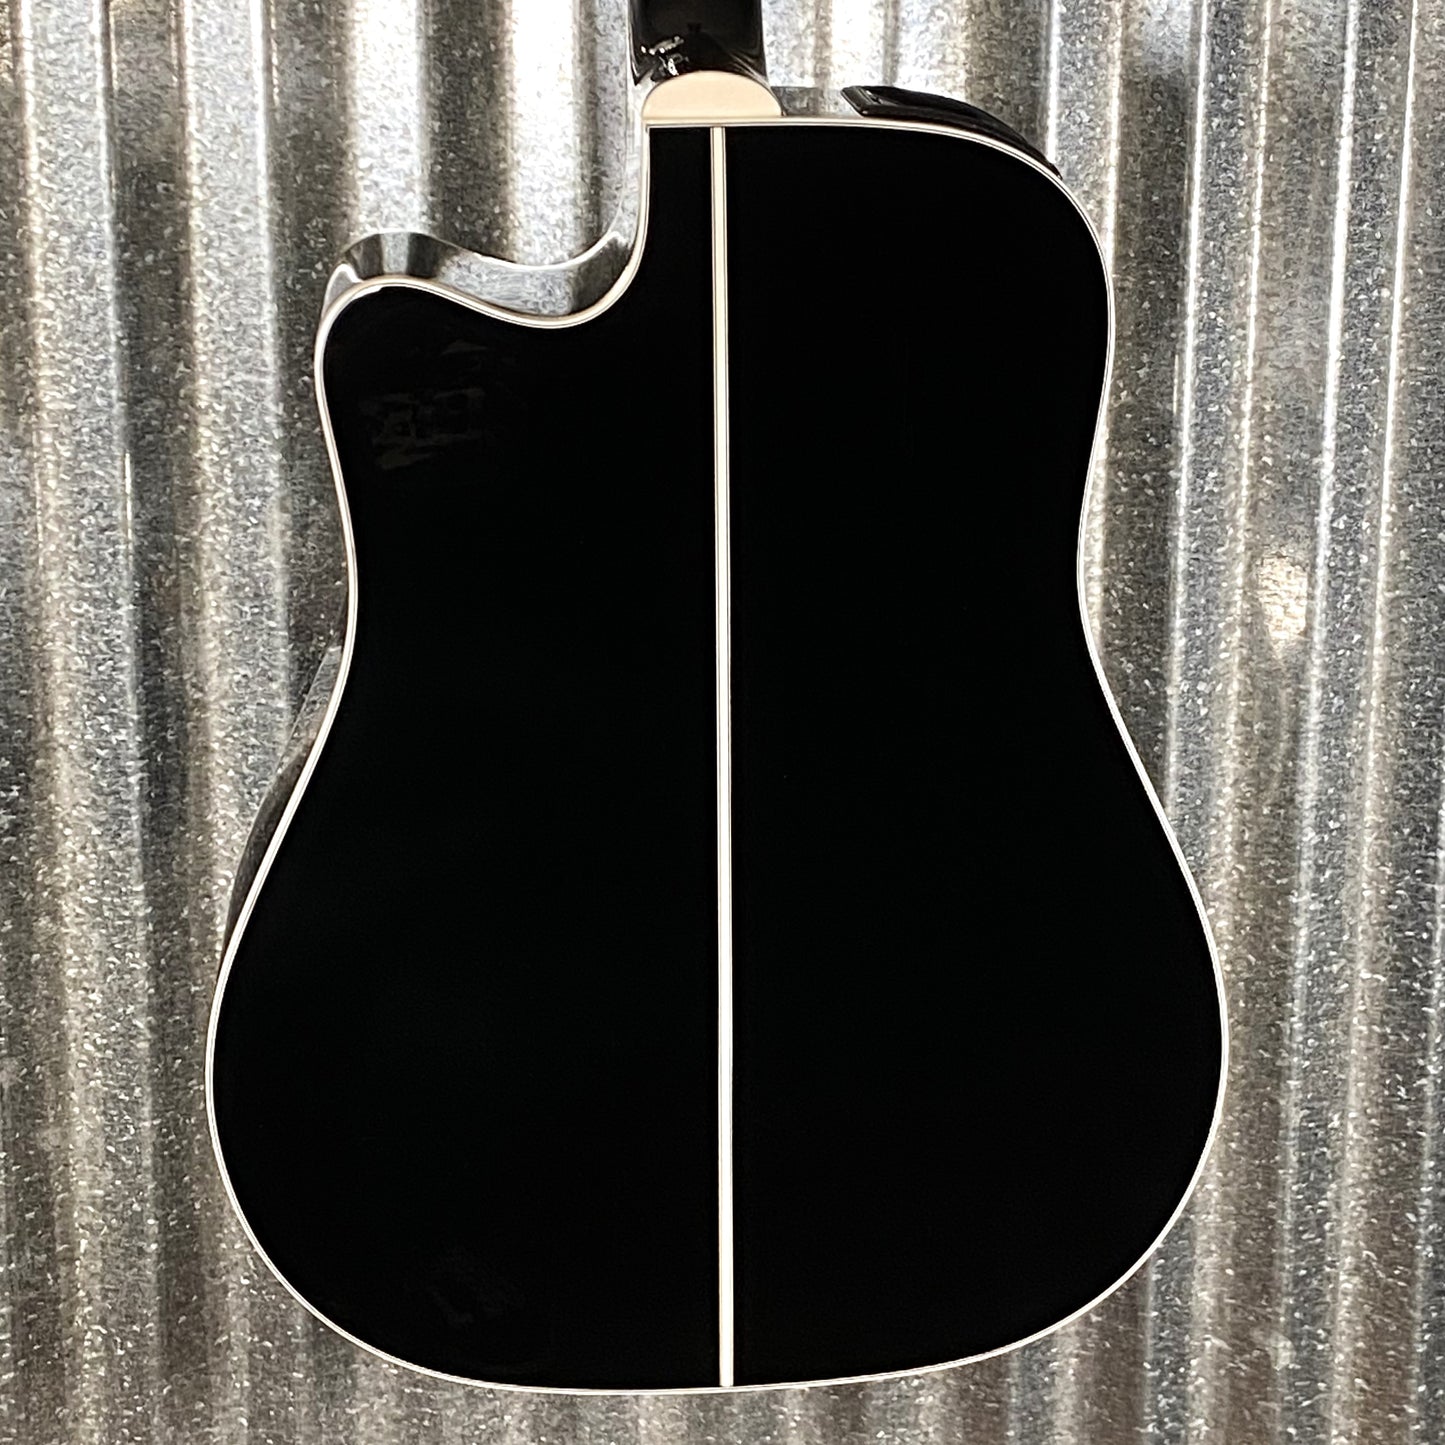 Takamine GC34CE Black Cutaway Acoustic Electric Guitar & Bag #2935